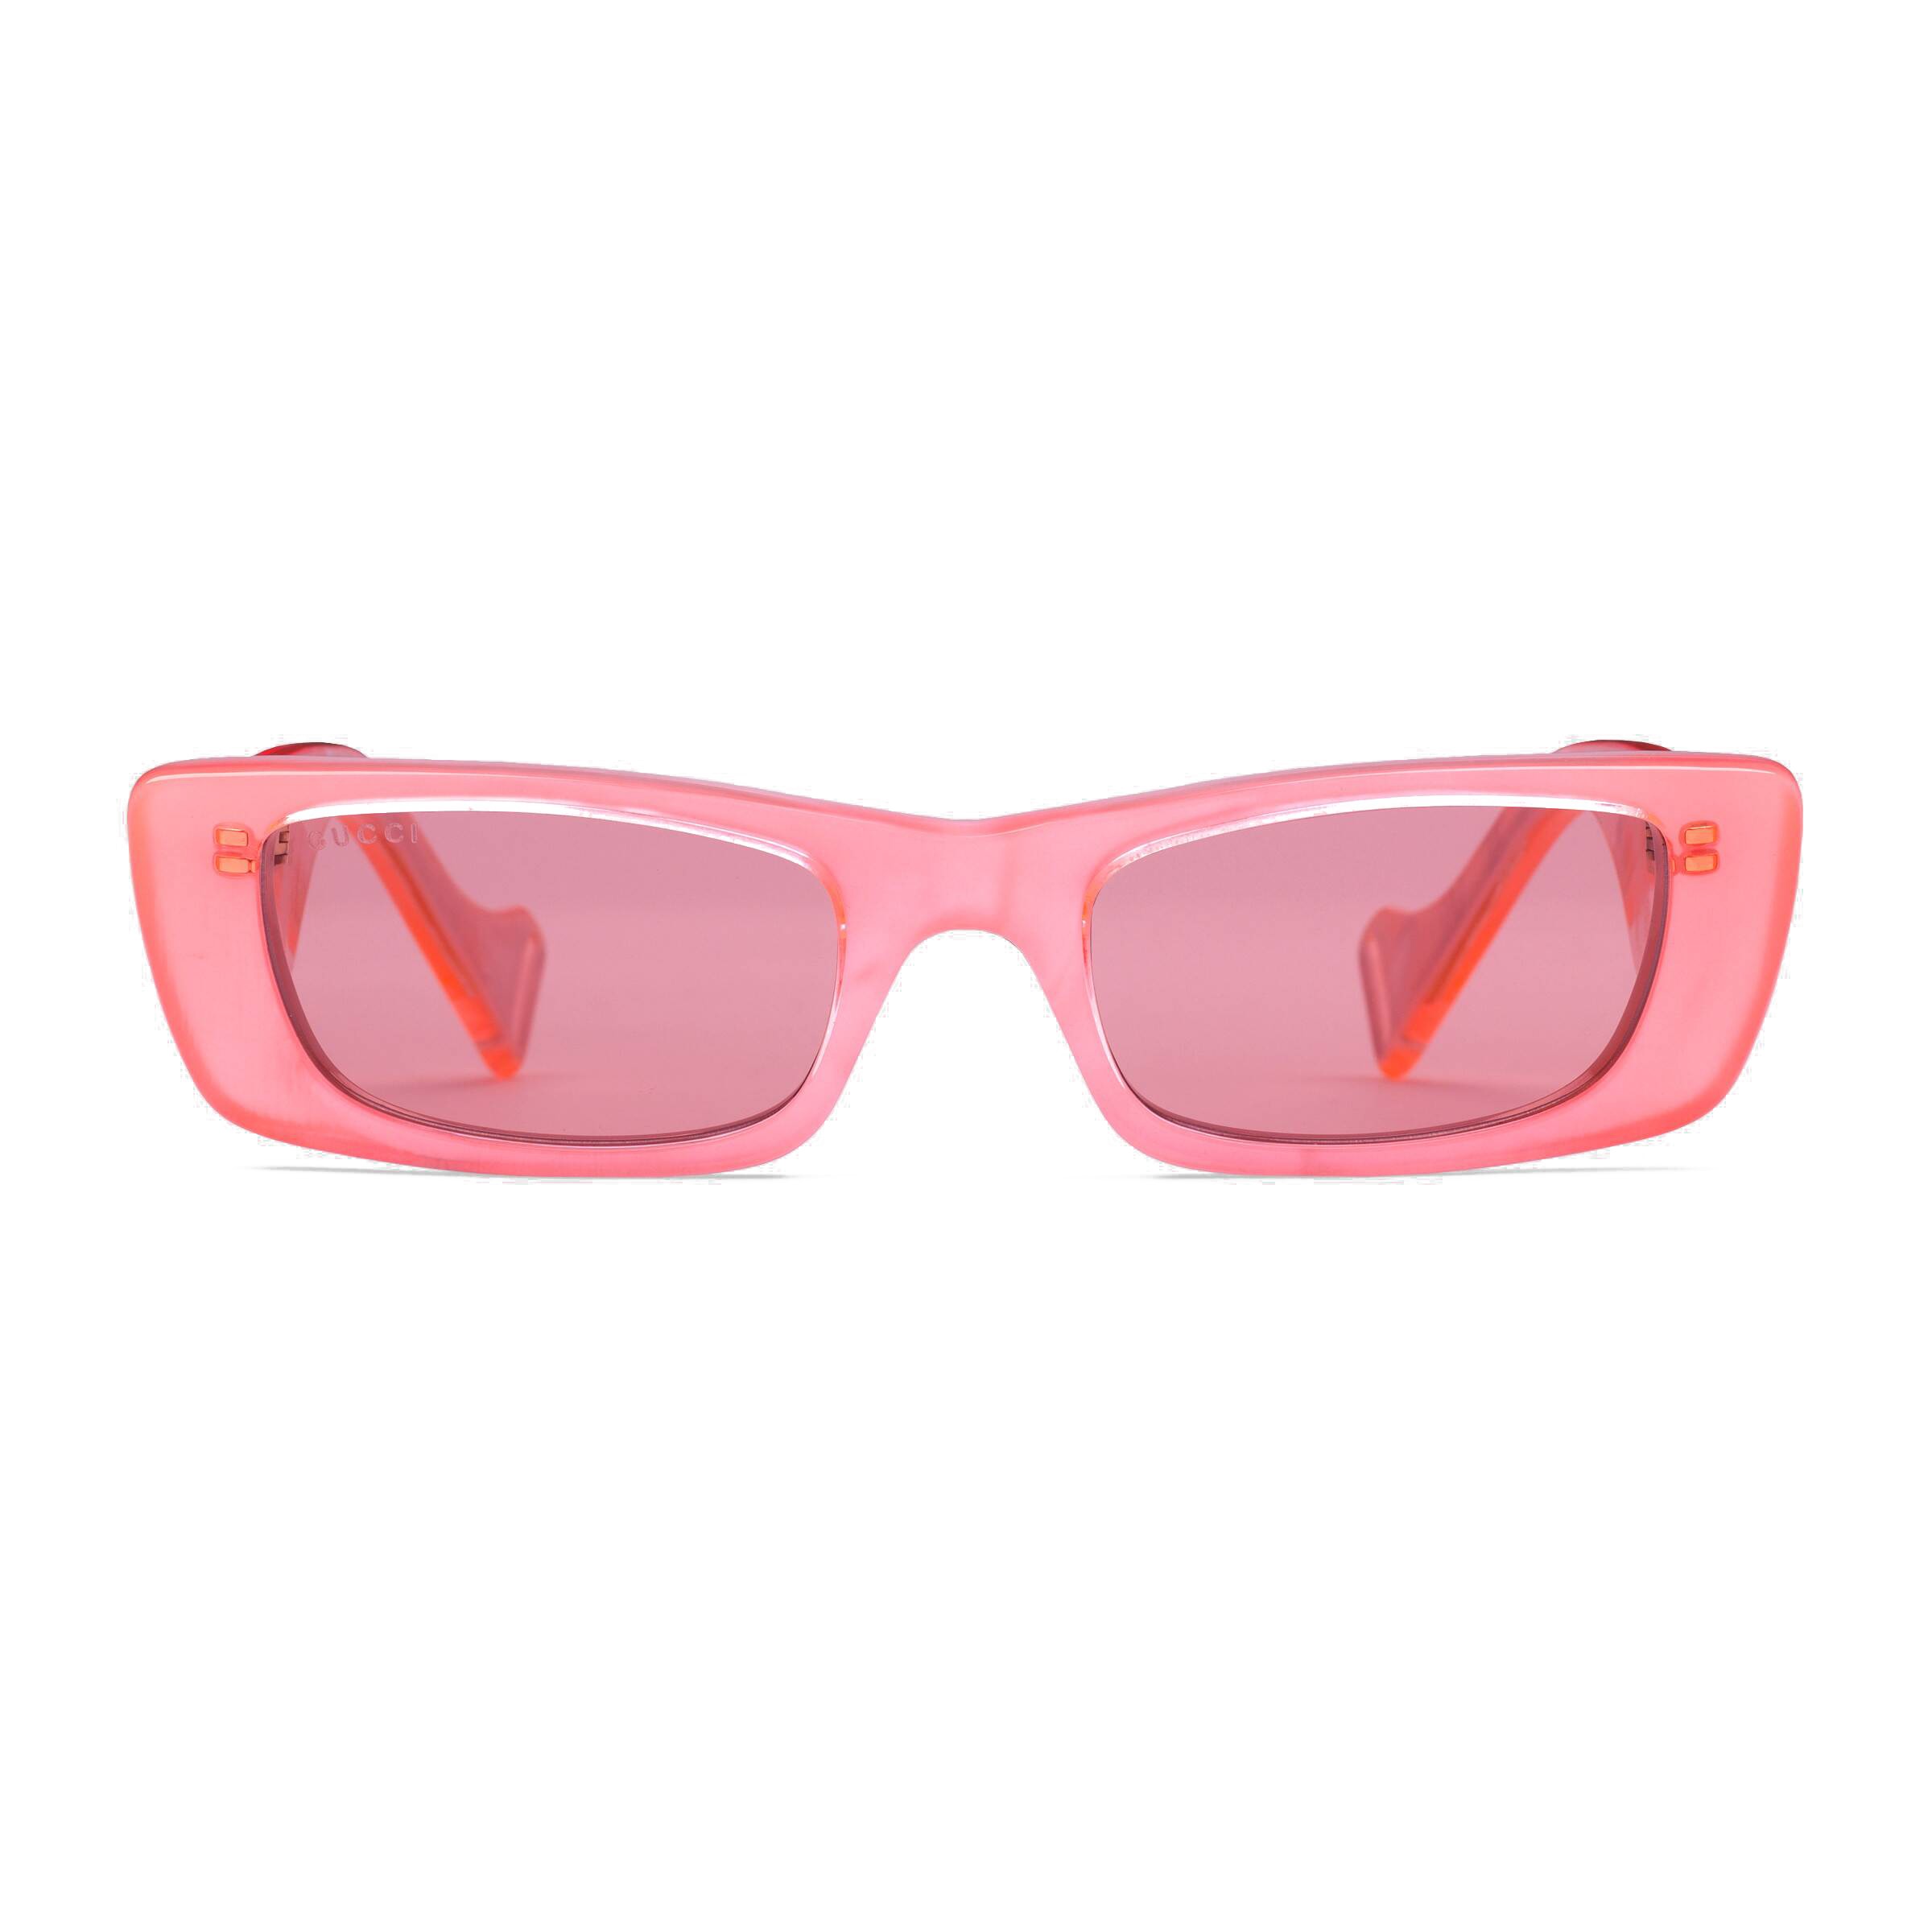 Gucci - Rectangular Sunglasses - Pink Fluo - Gucci Eyewear - Avvenice